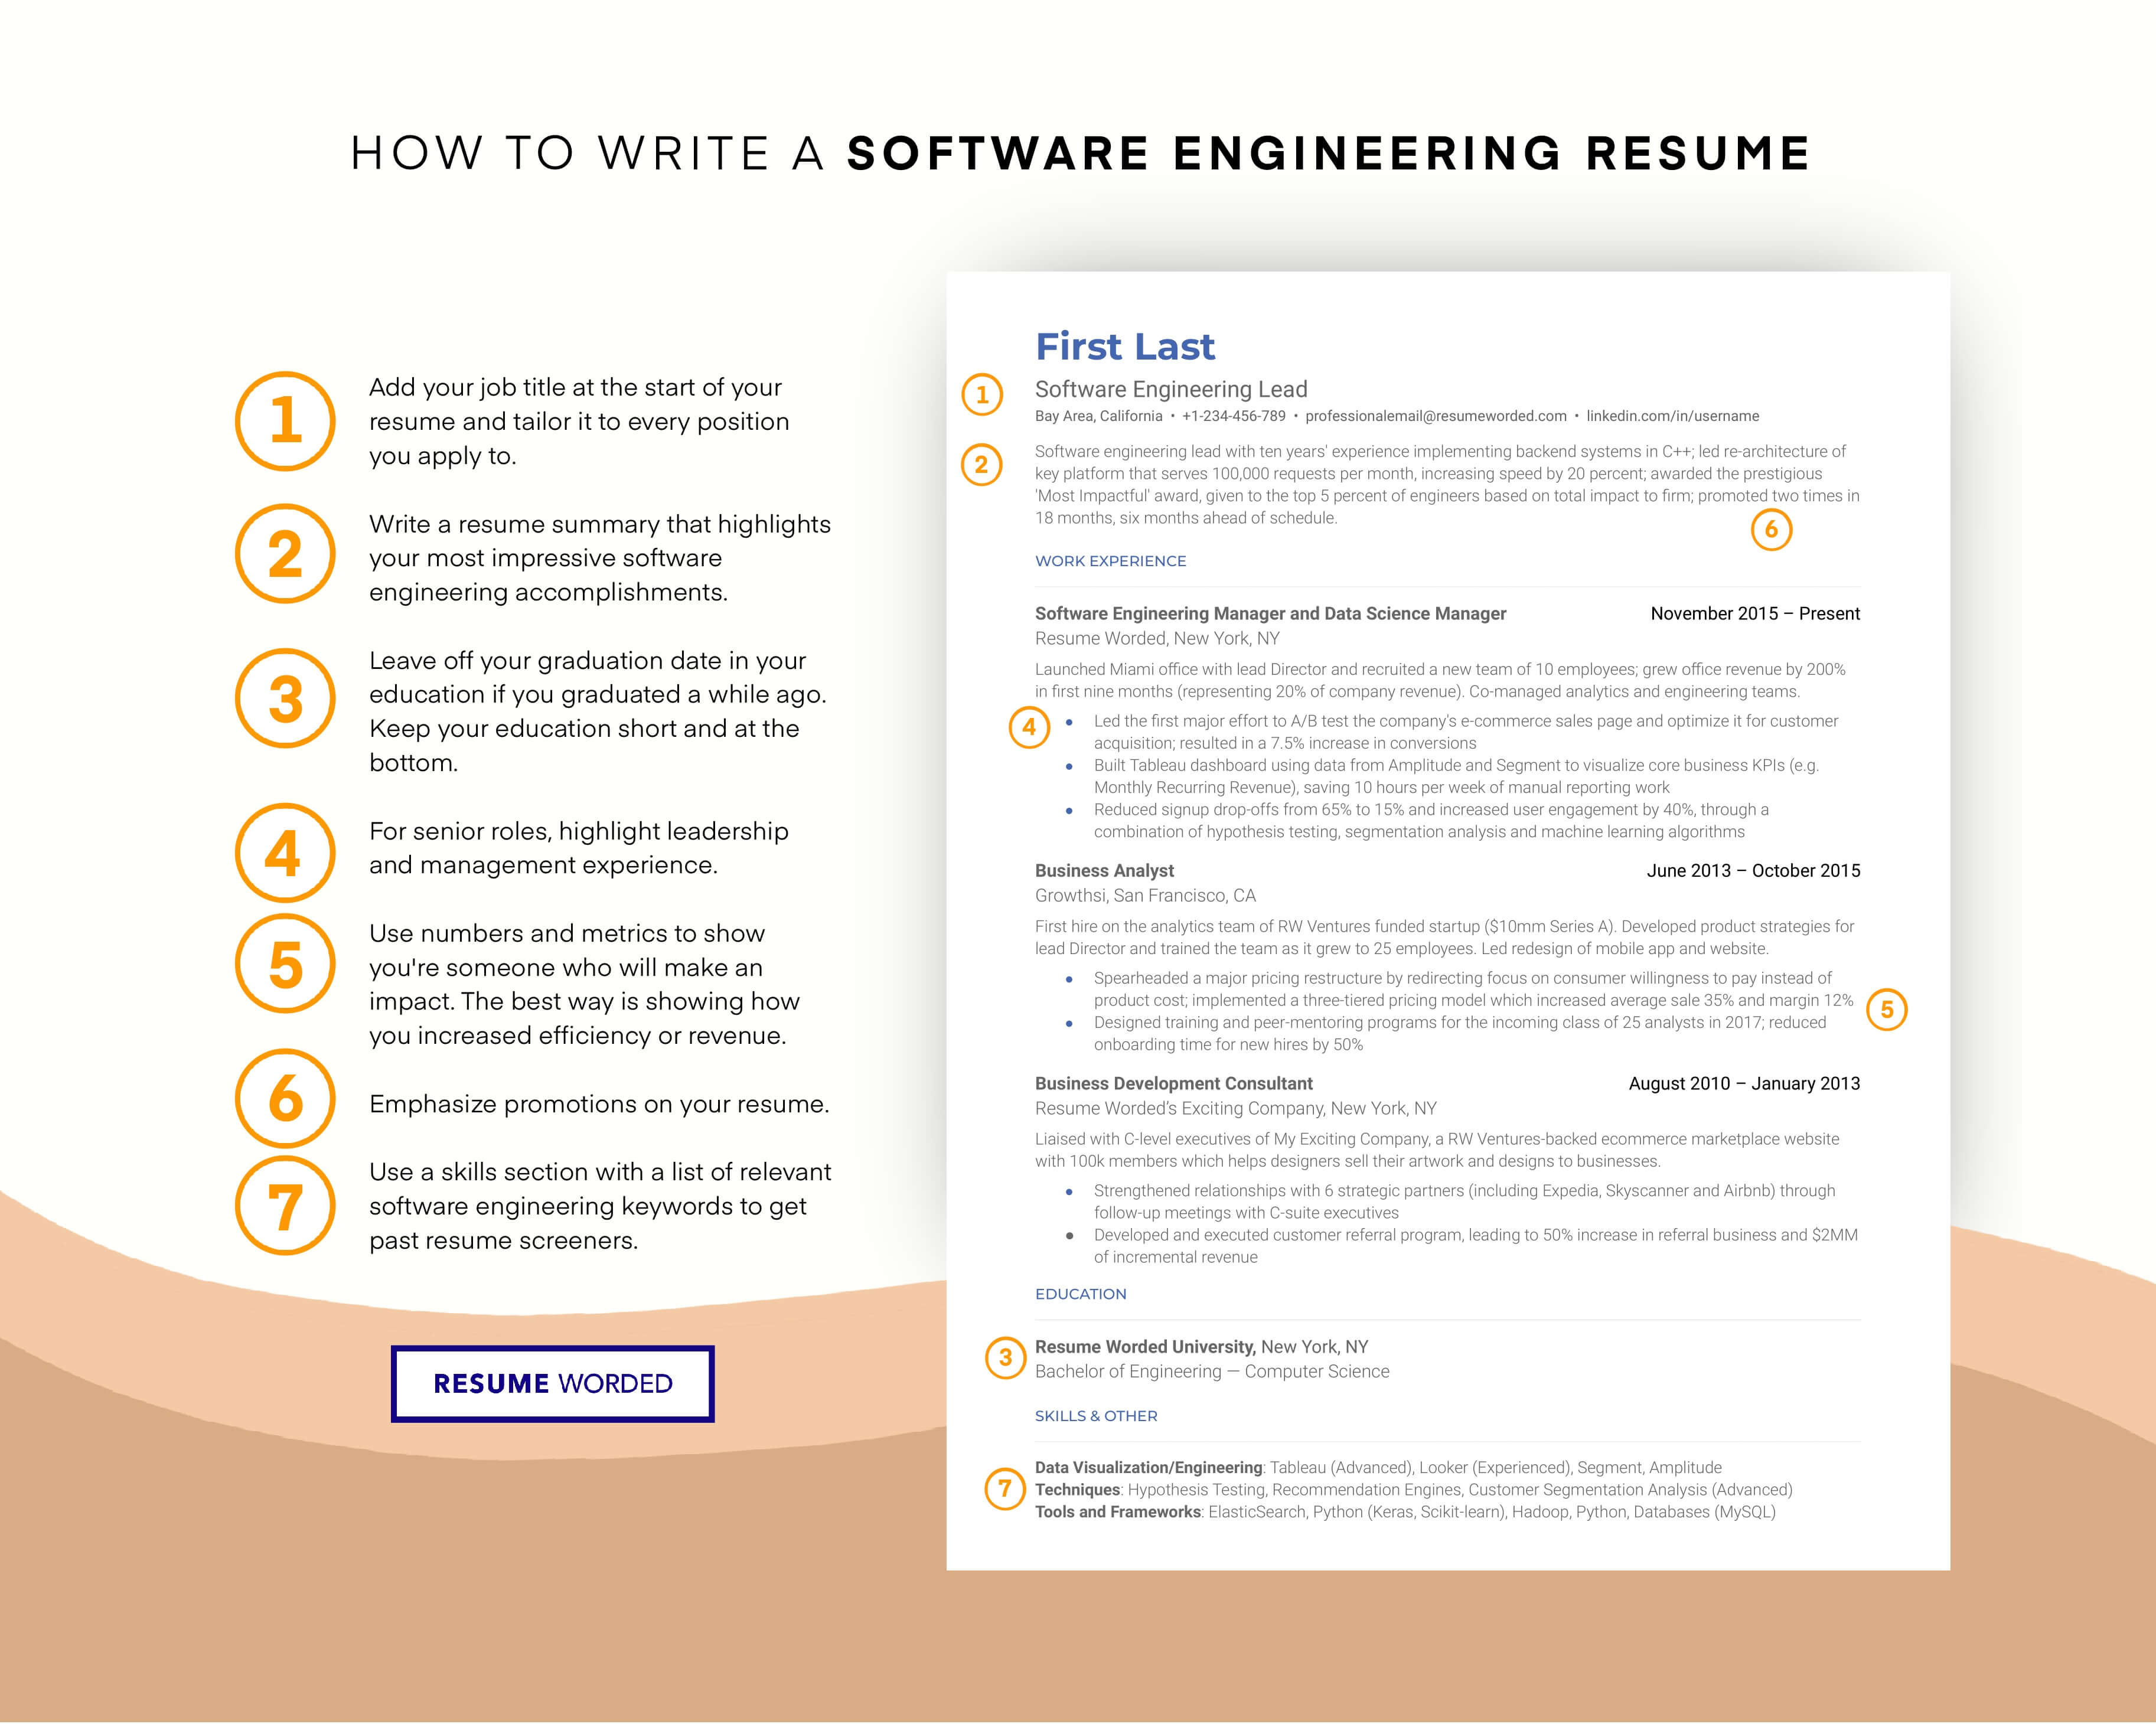 Showcase your professional experience in software engineering - Docker/DevOps Engineer Resume